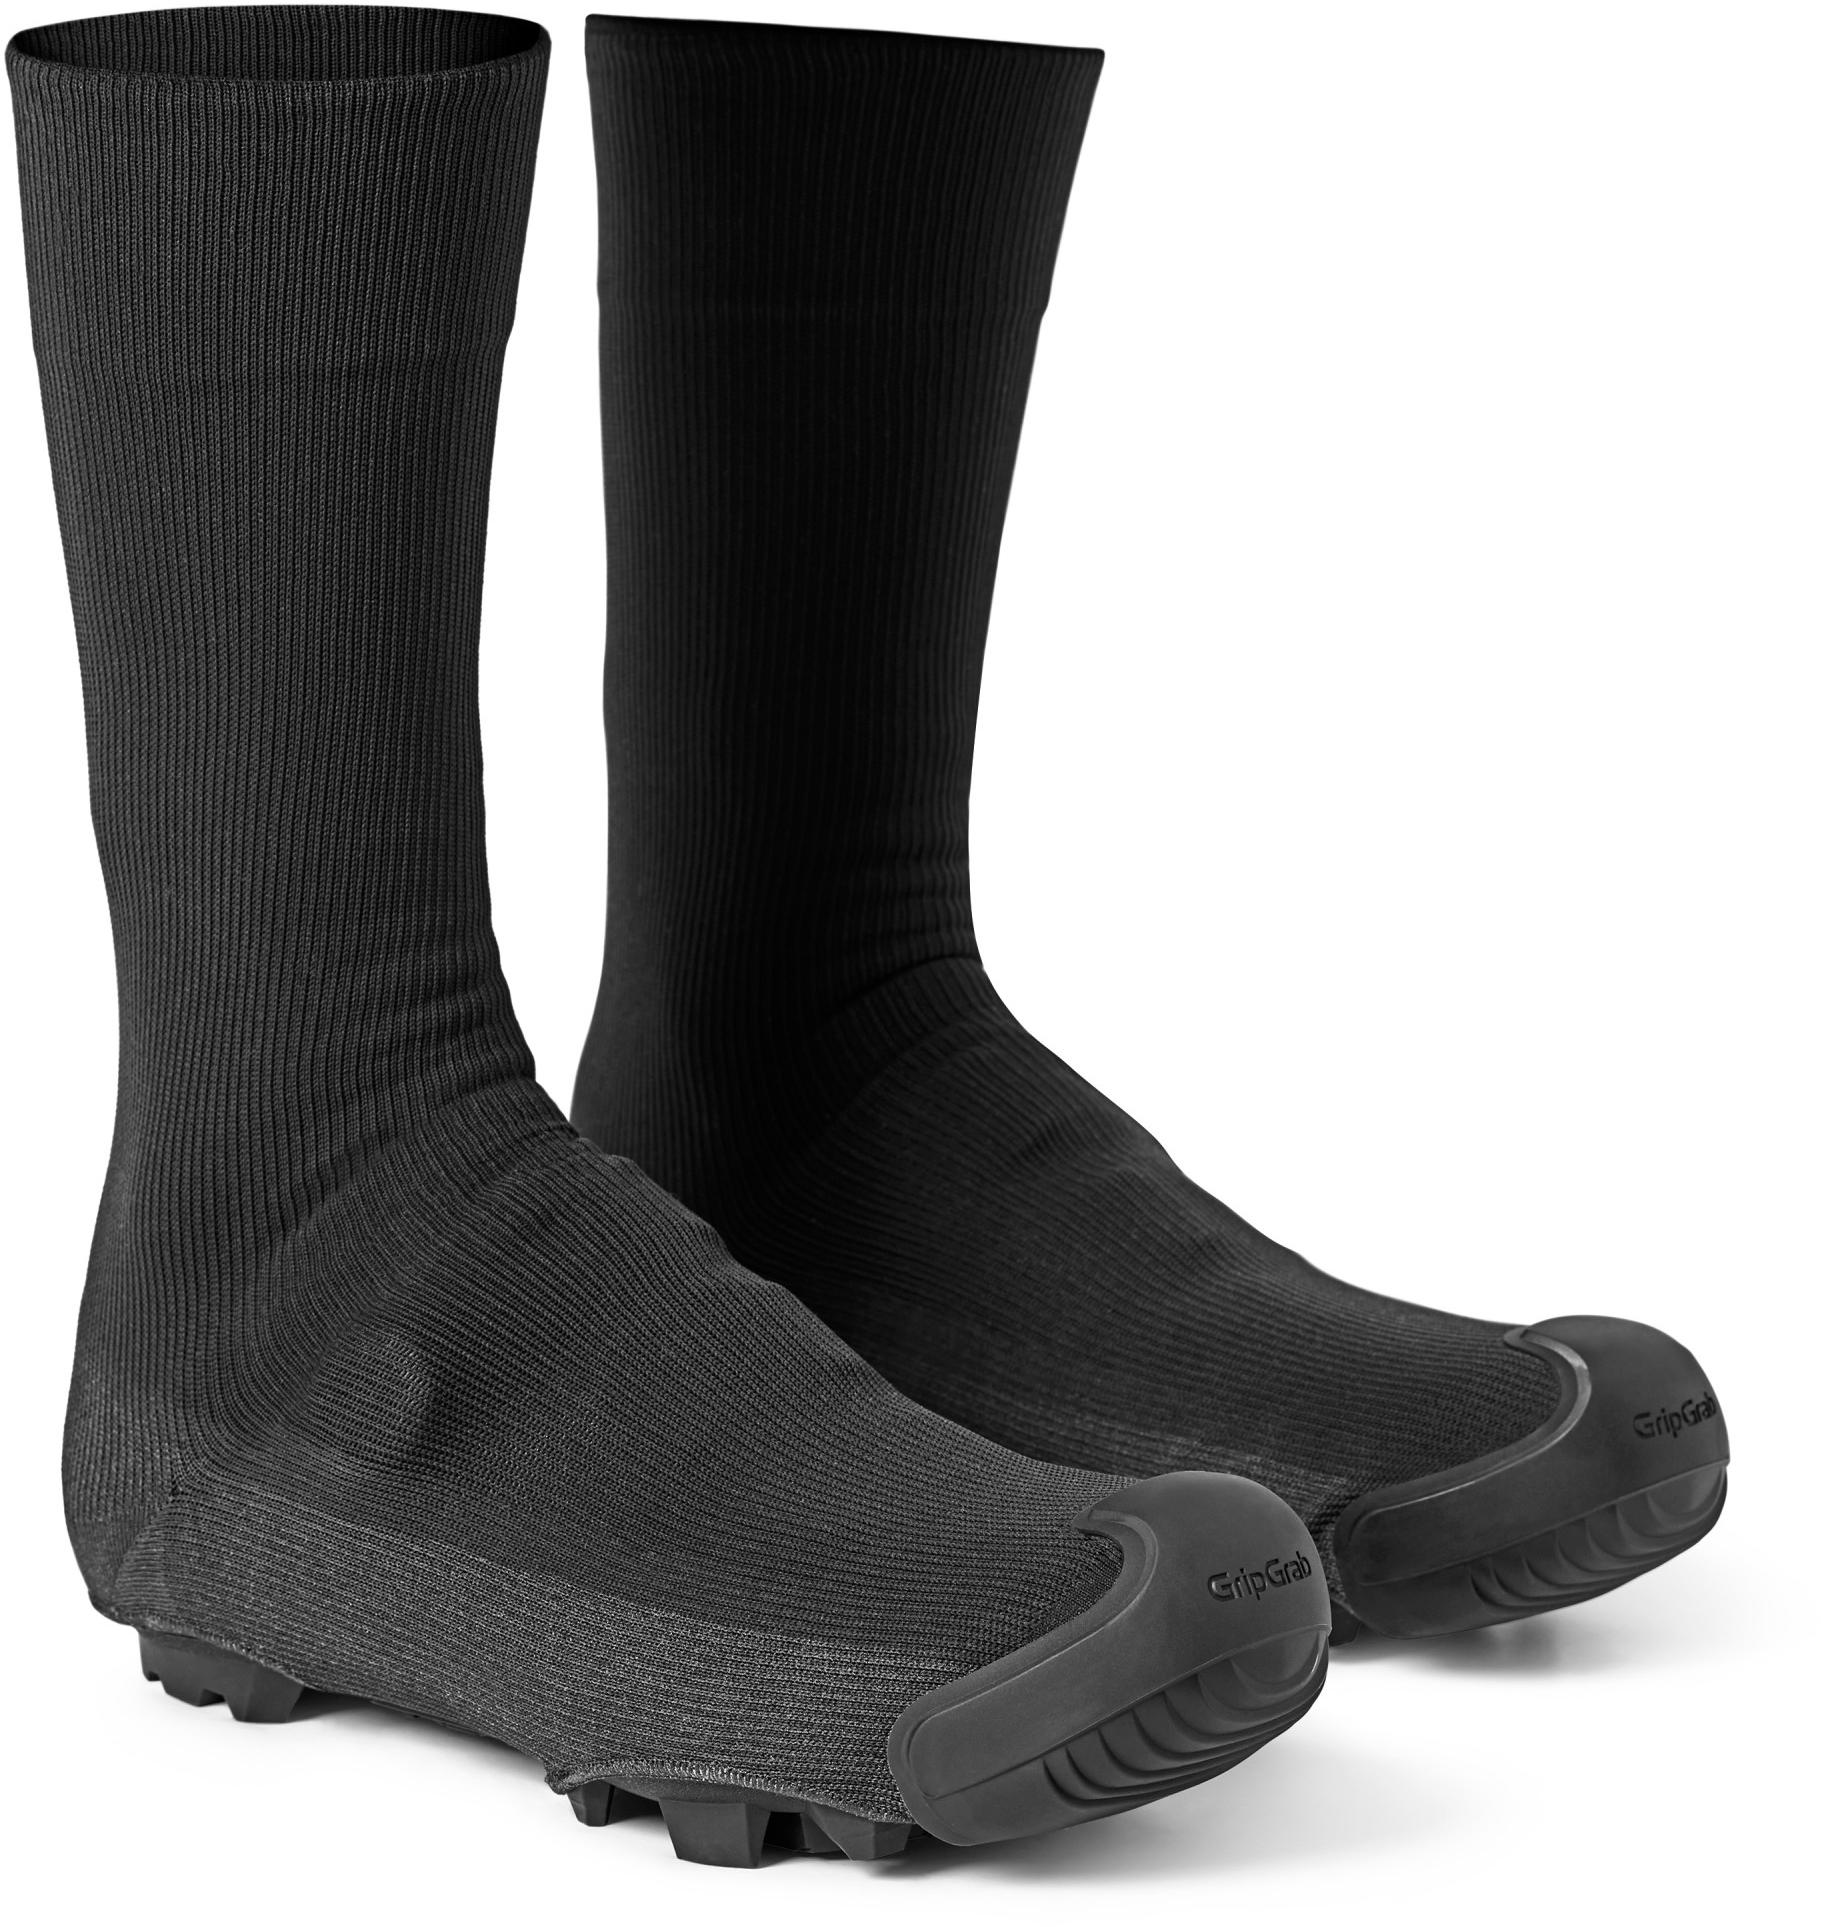 Gripgrab Explorer Waterproof Gravel Shoe Covers - Black